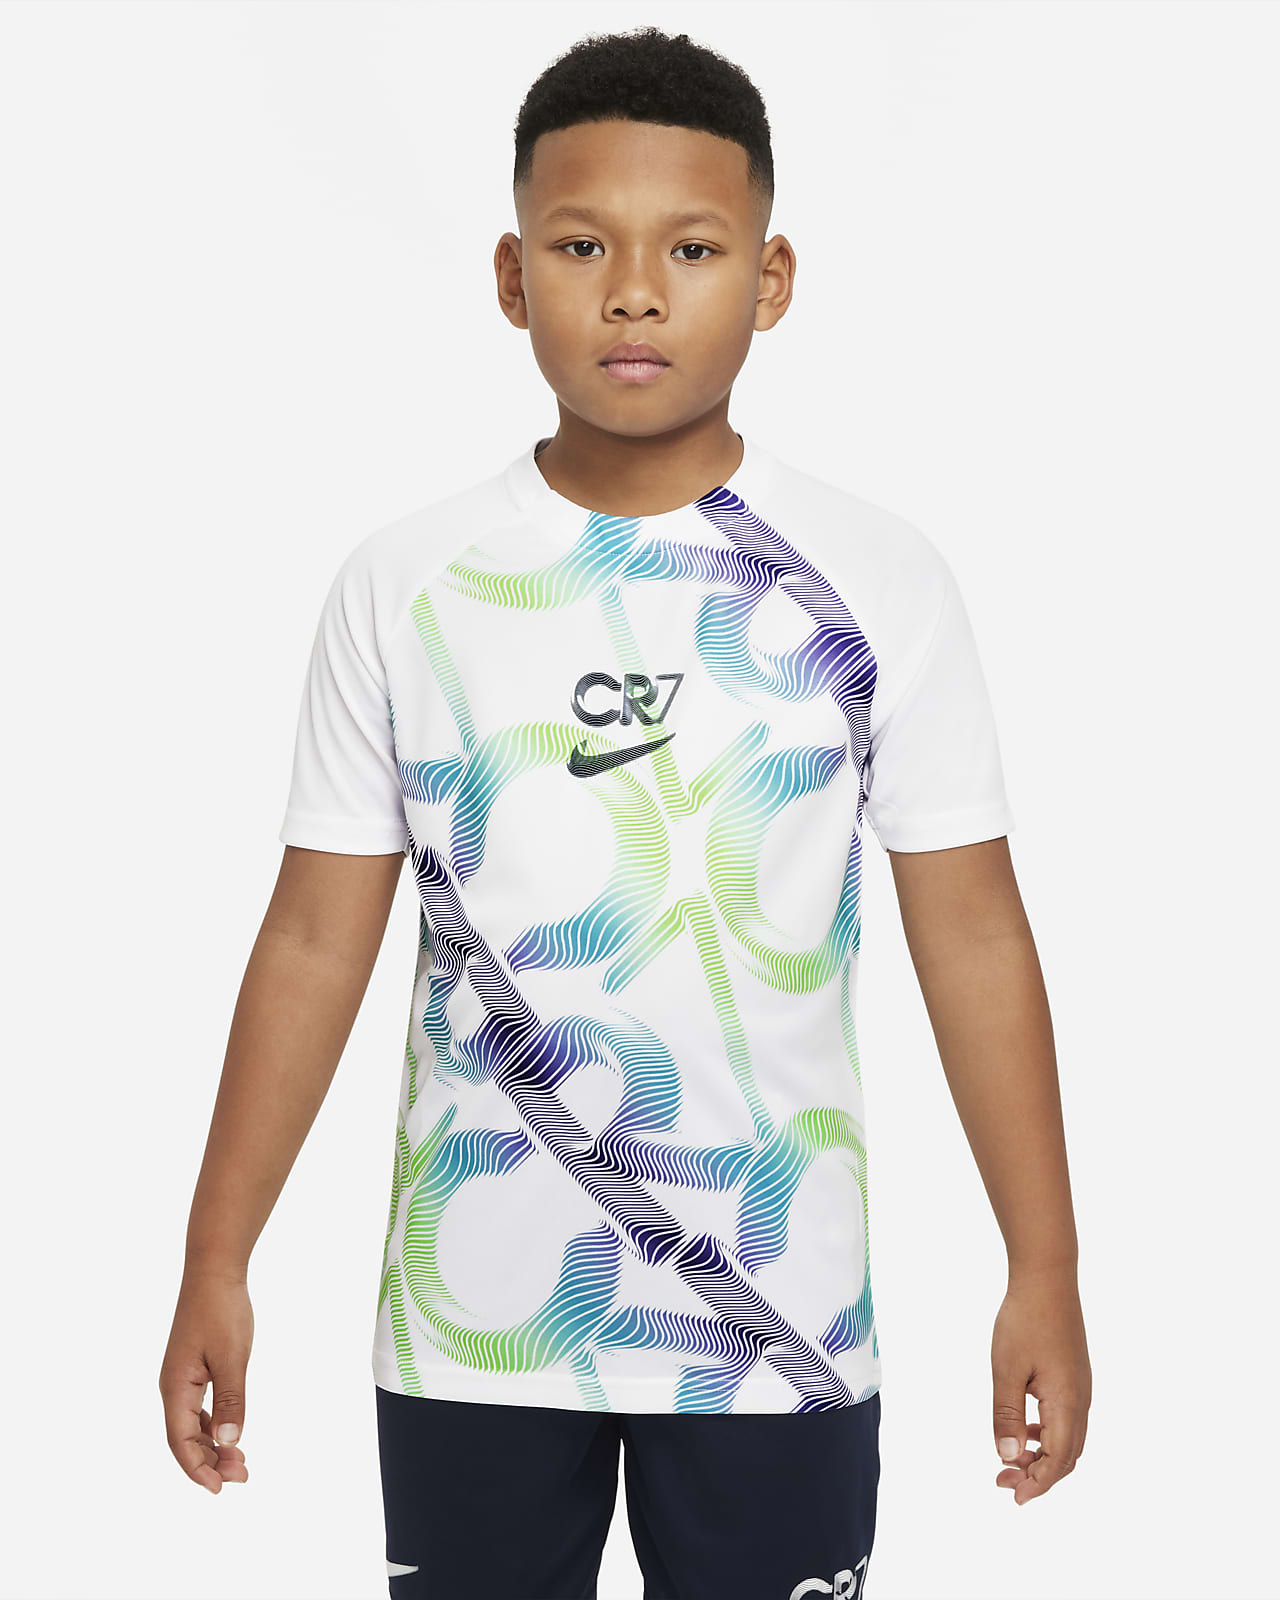 Nike Dri-FIT CR7 Older Kids' Short-Sleeve Football Top